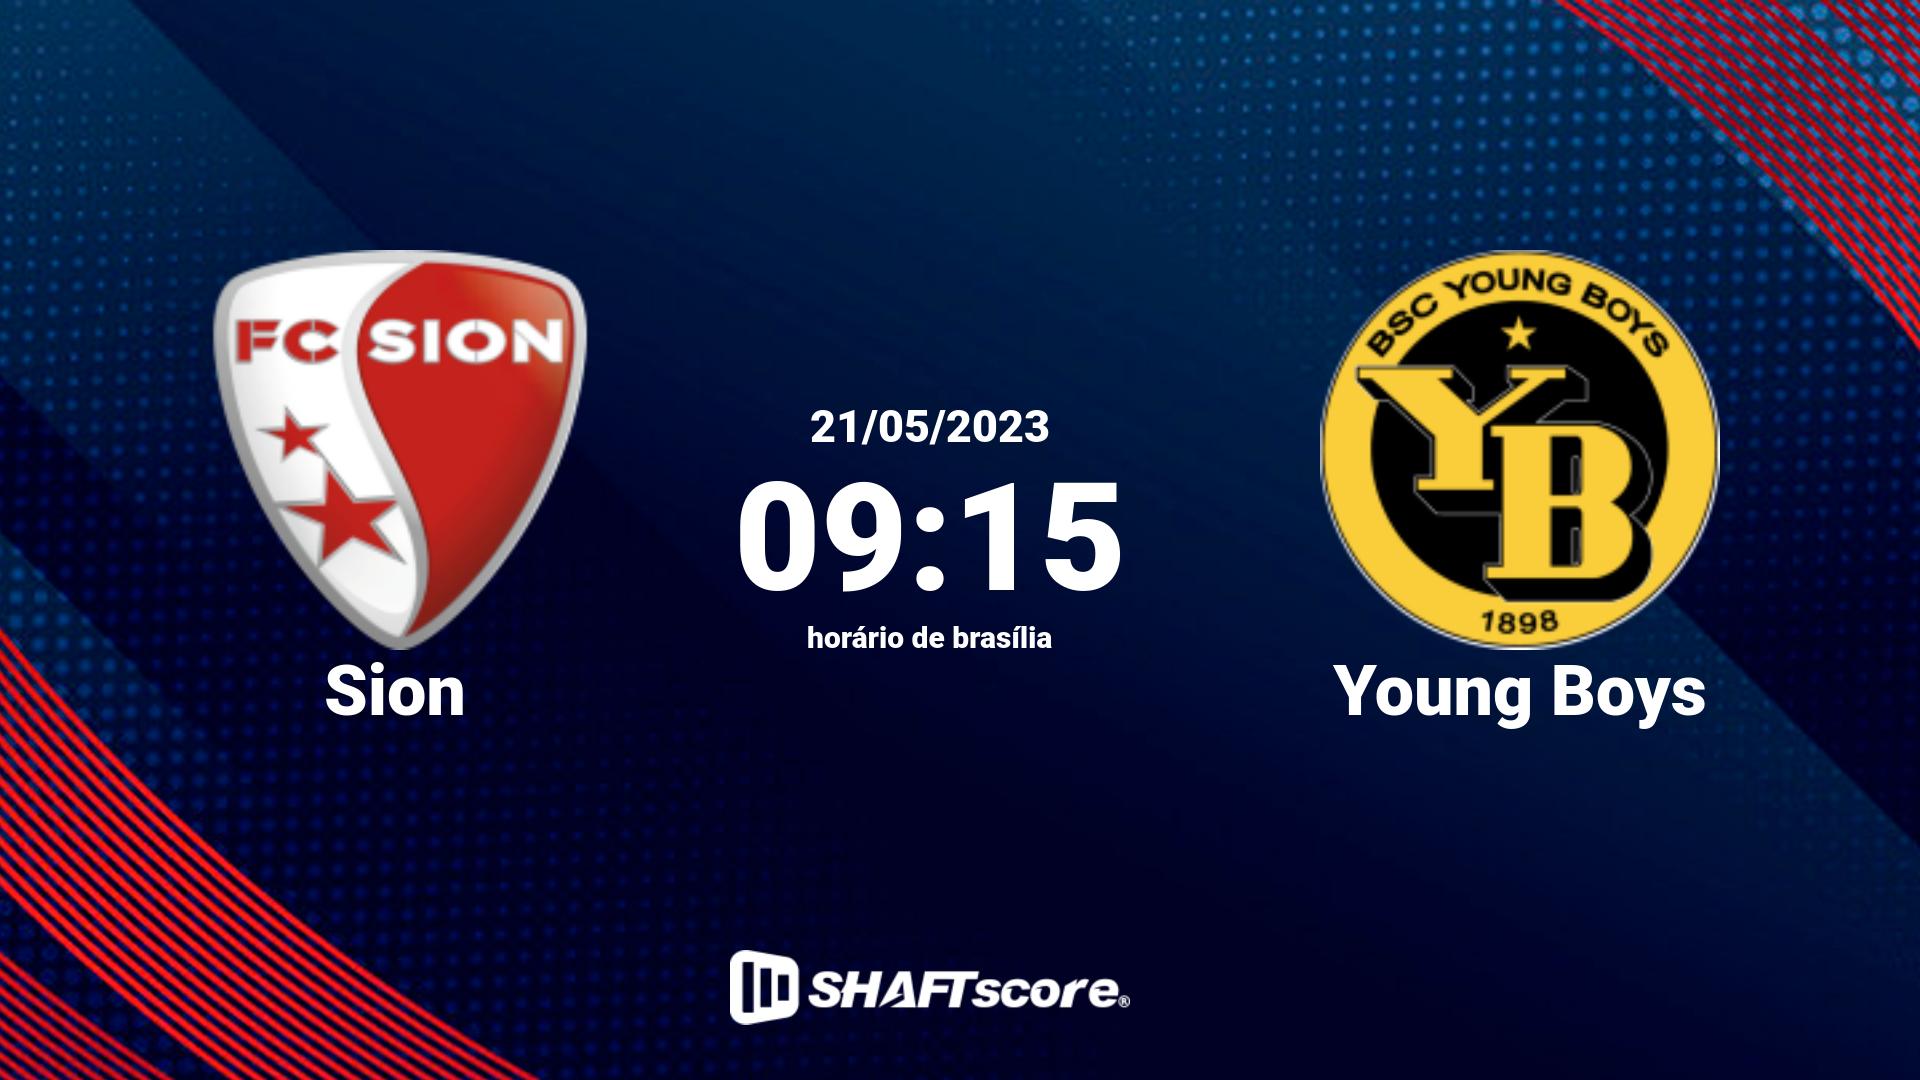 Estatísticas do jogo Sion vs Young Boys 21.05 09:15